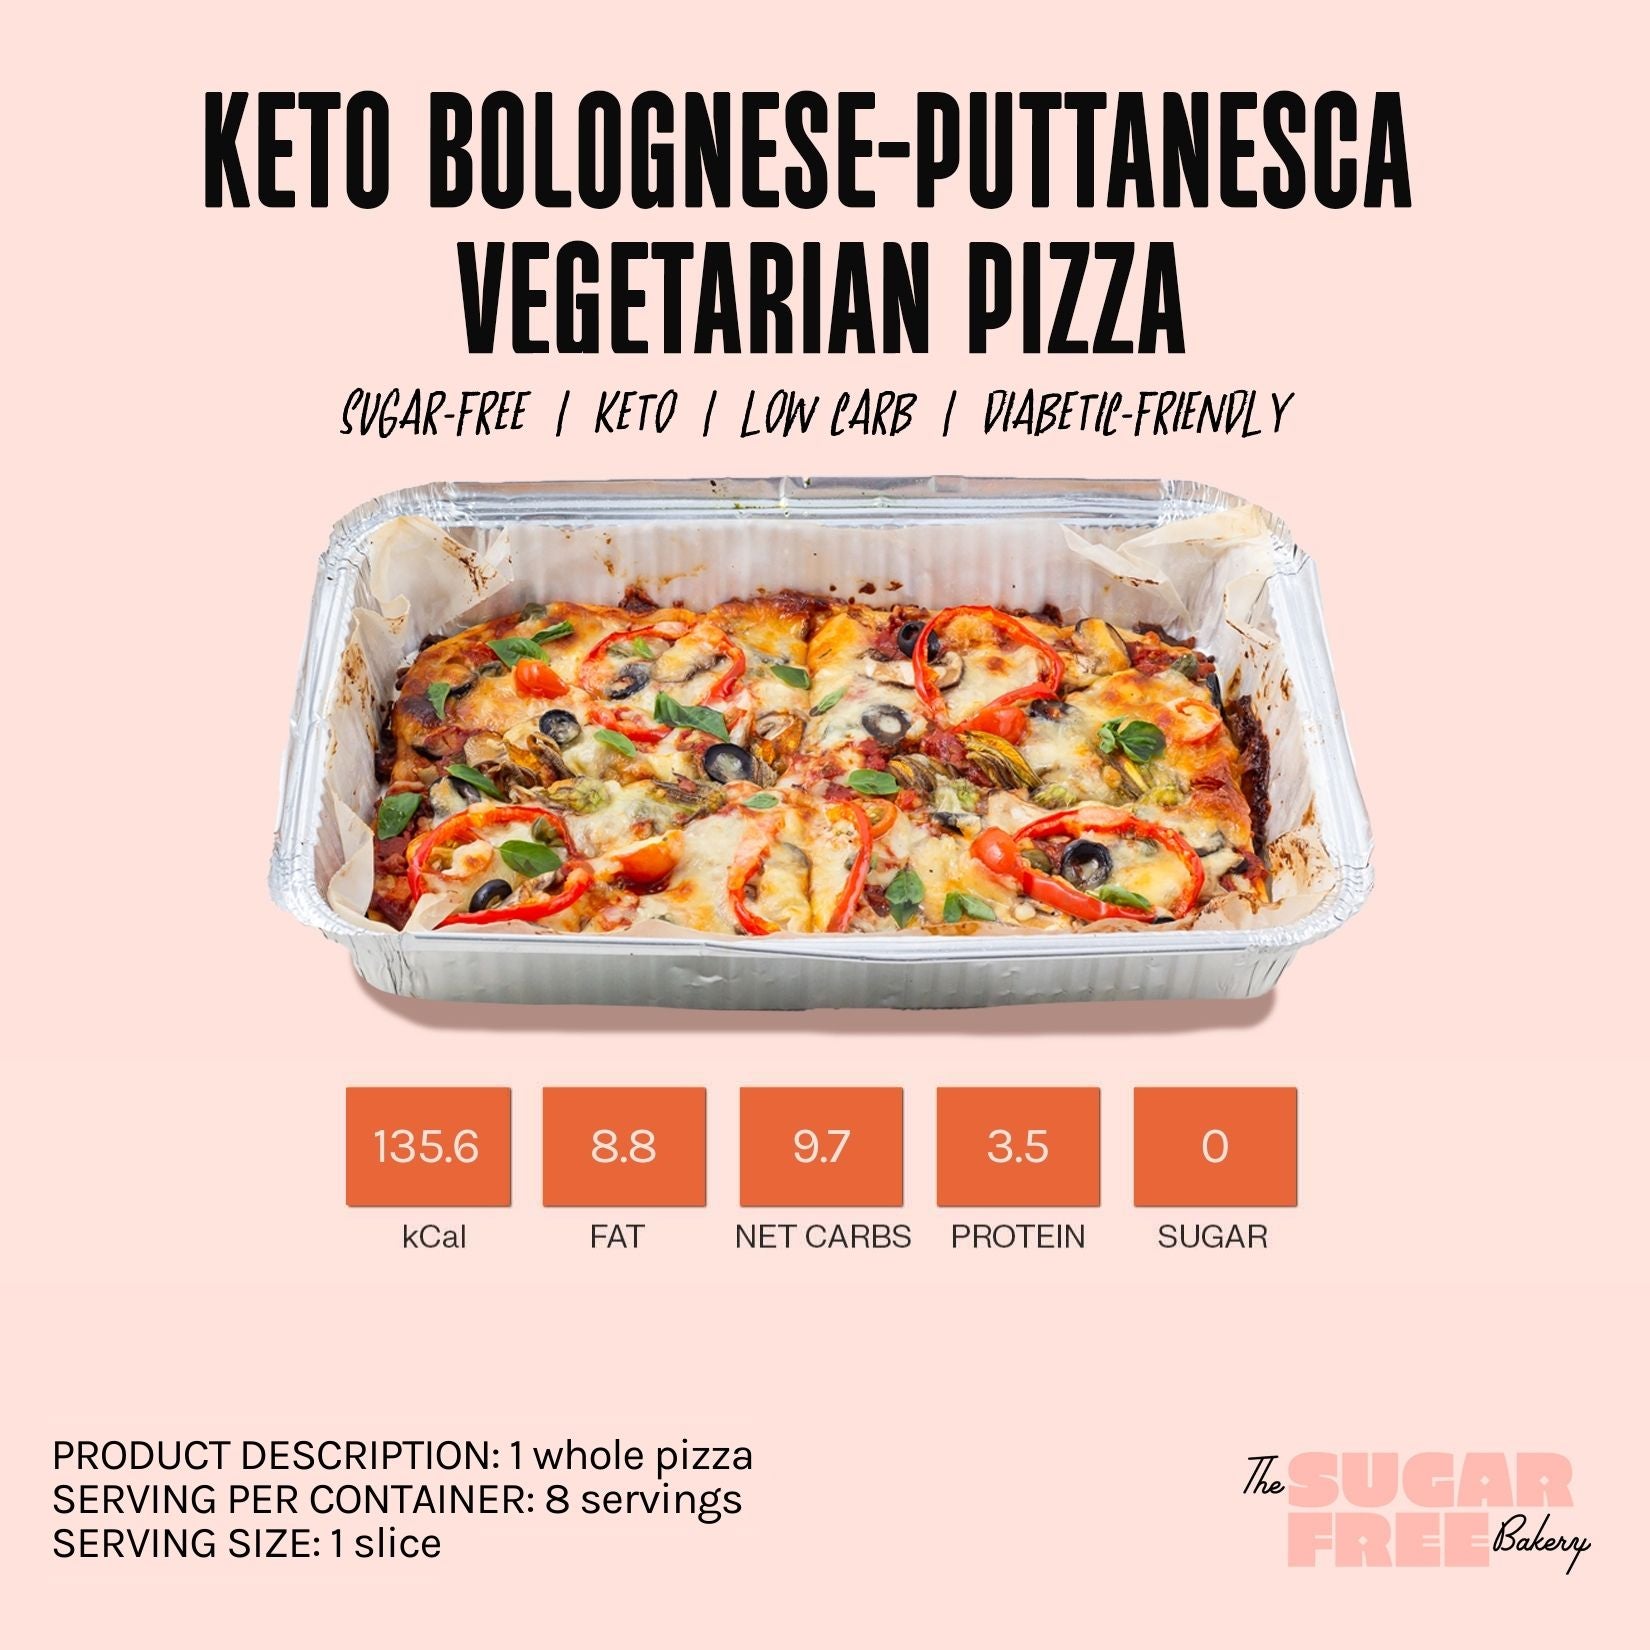 Keto Bolognese-Puttanesca Vegetarian Pizza